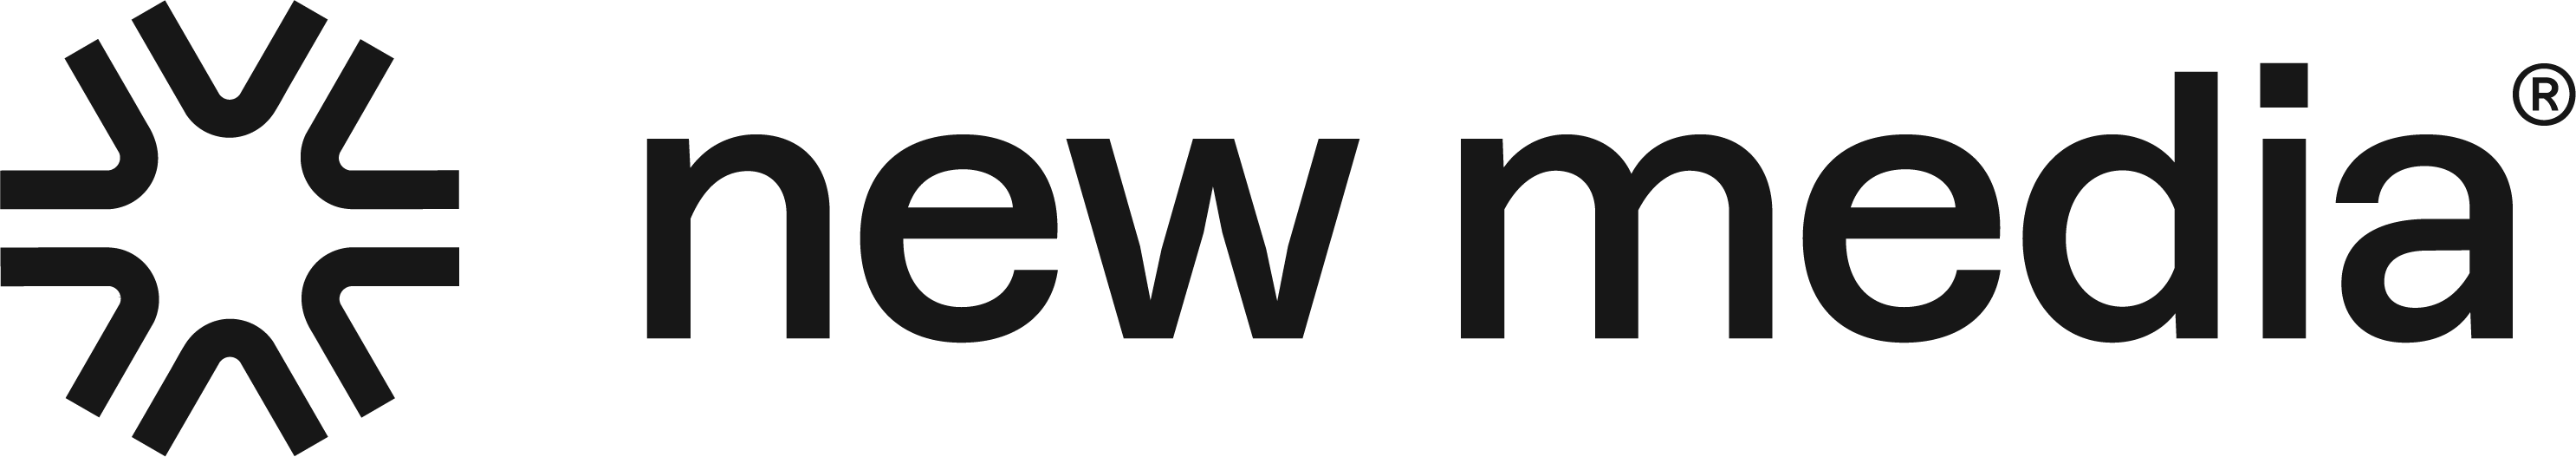 newmedia-logo-zwart - Nienke de Boer